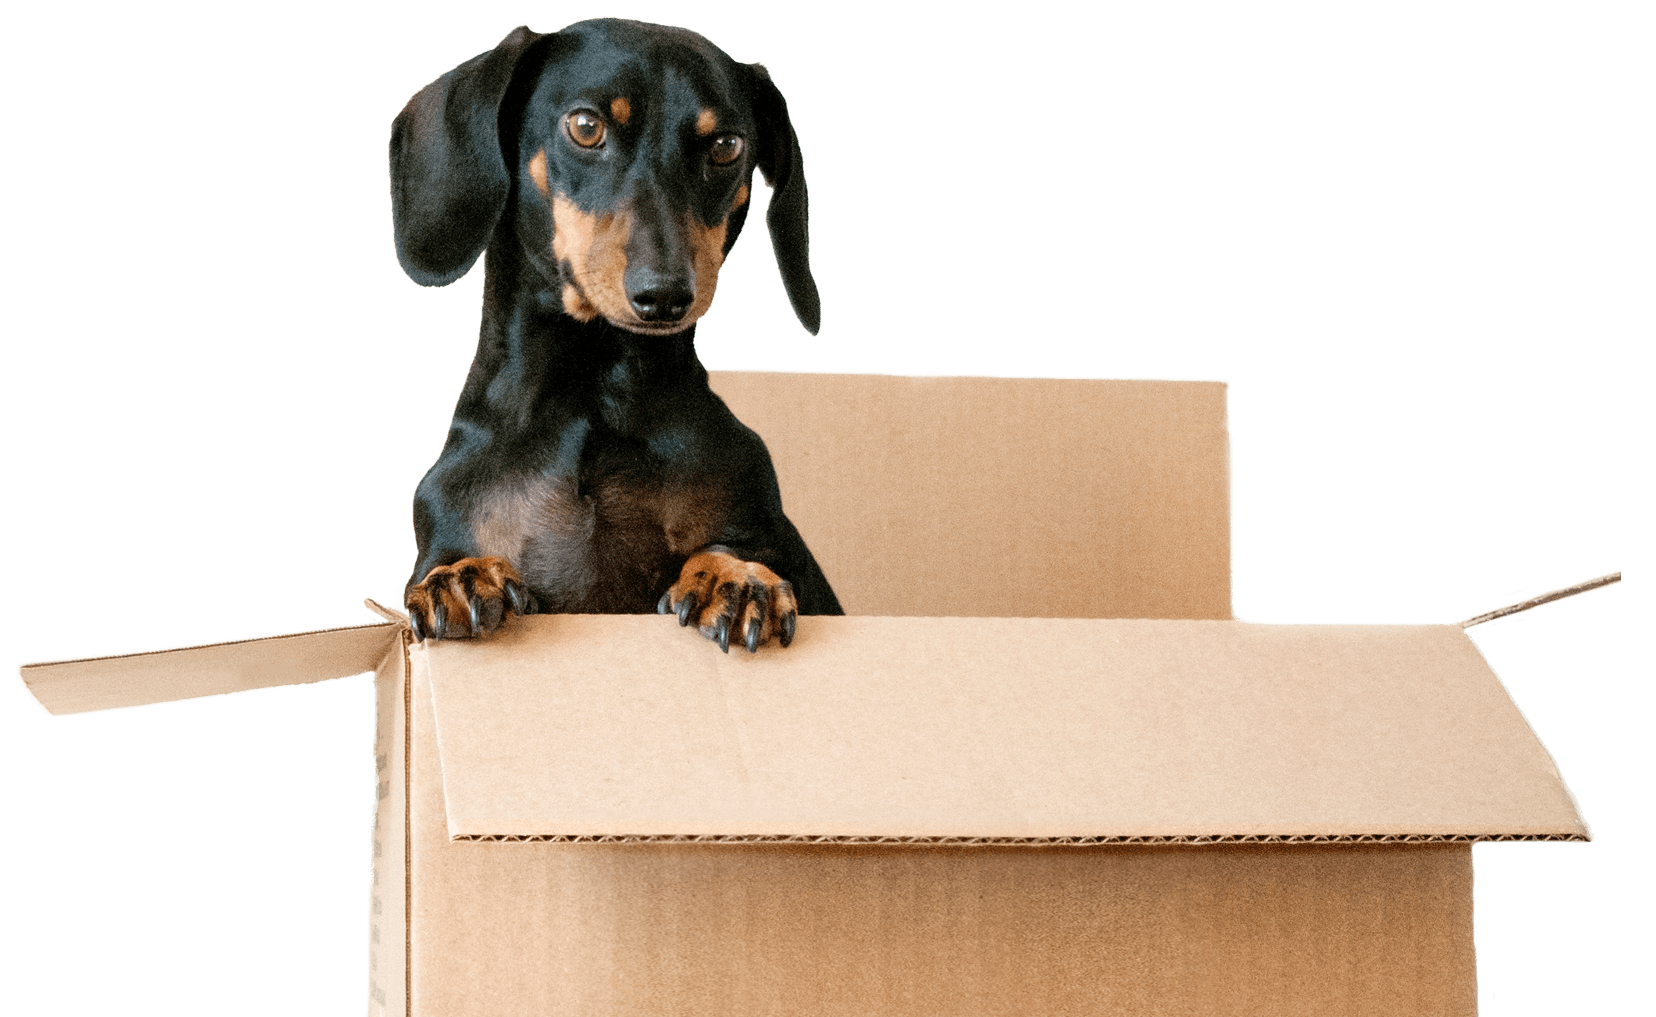 A cute dachshund climbing out of a cardboard storage box.